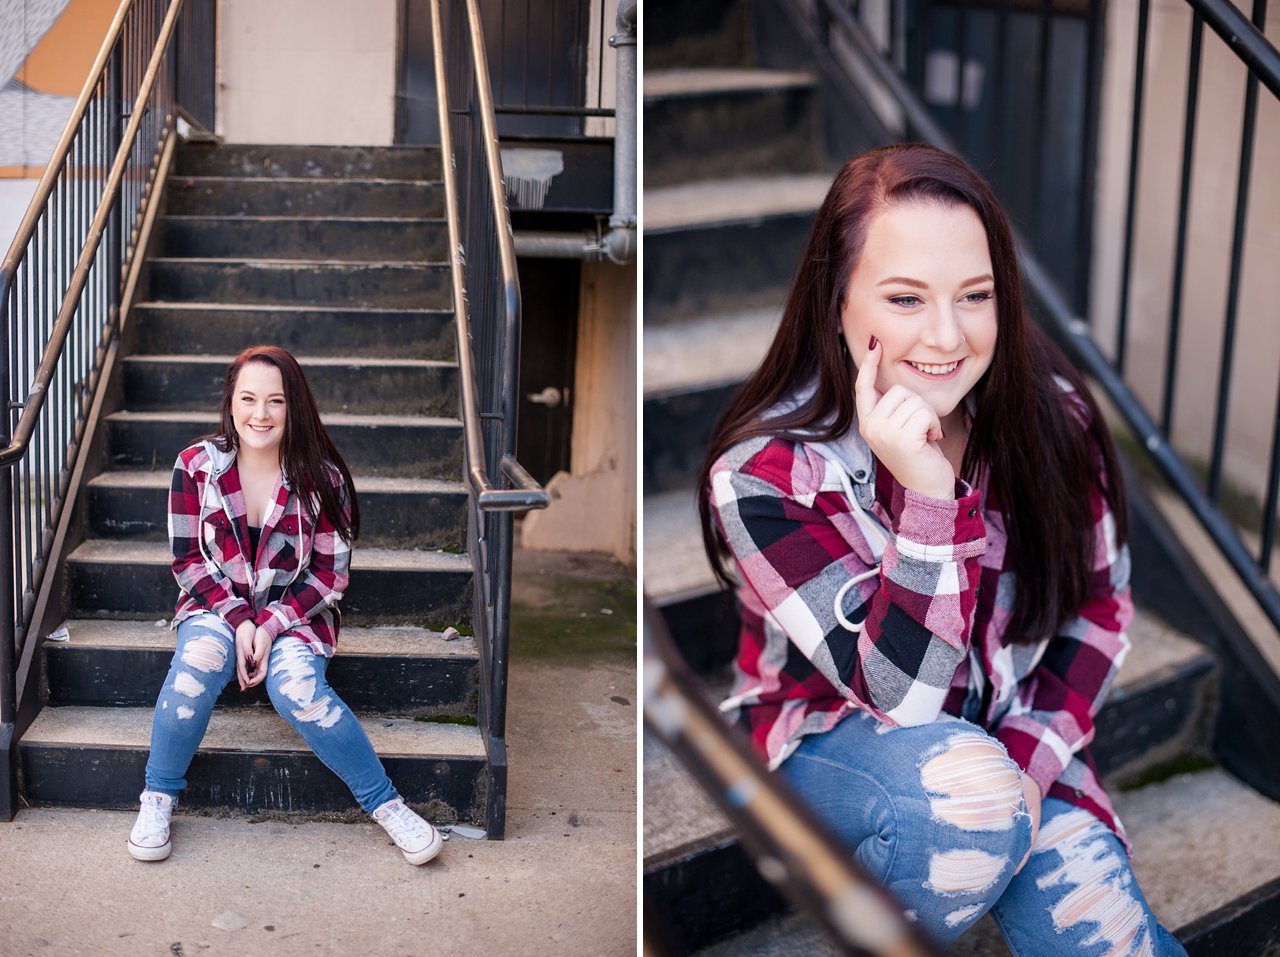 Urban senior girl portrait session wearing plaid shirt and jeans Richmond, VA Canal Walk